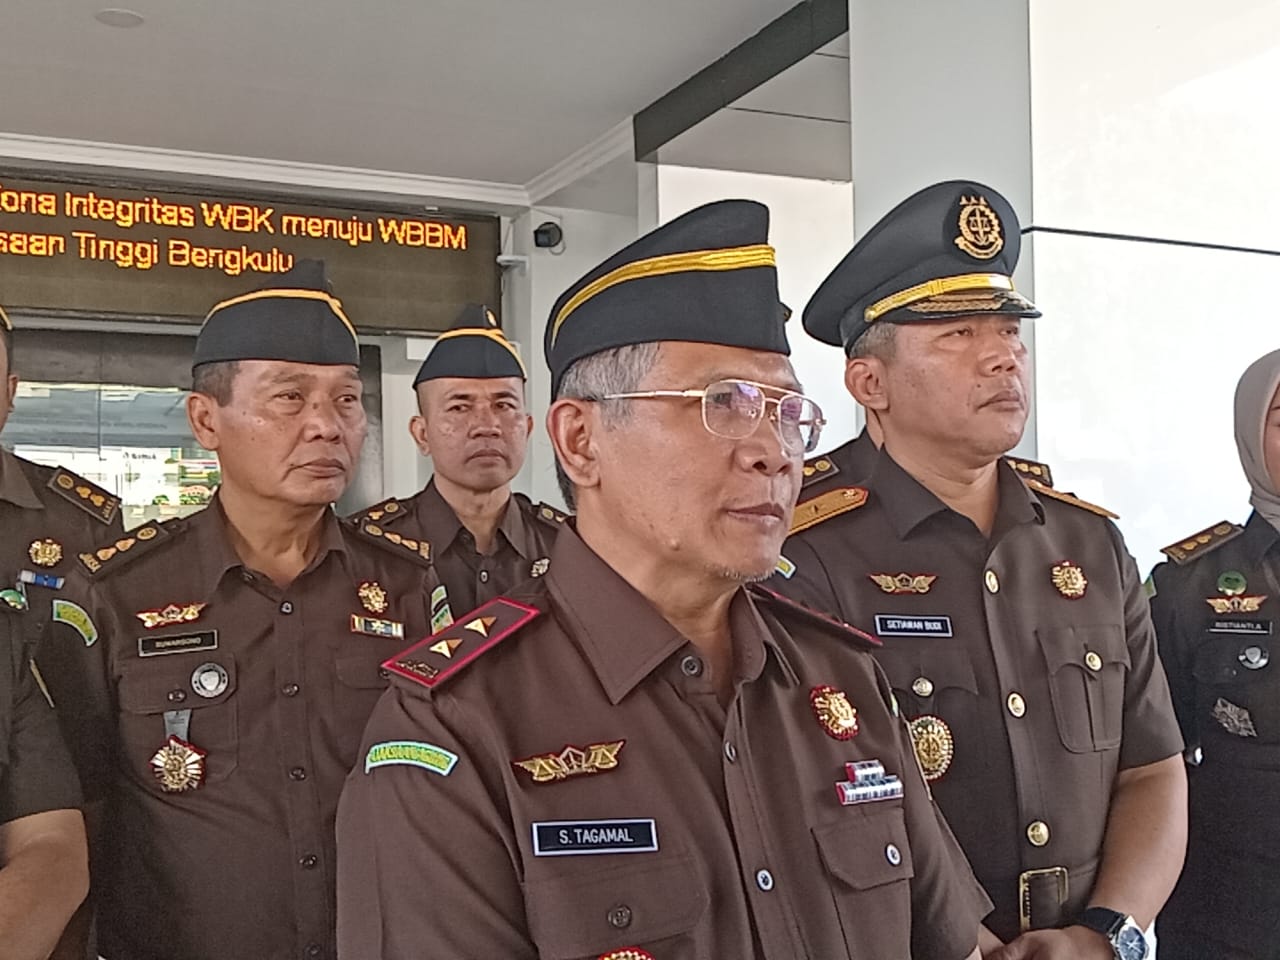 Setiawan Budi Cahyono Resmi Jabat Wakajati Bengkulu, Dilantik Kajati Bersama 8 Pejabat Lain